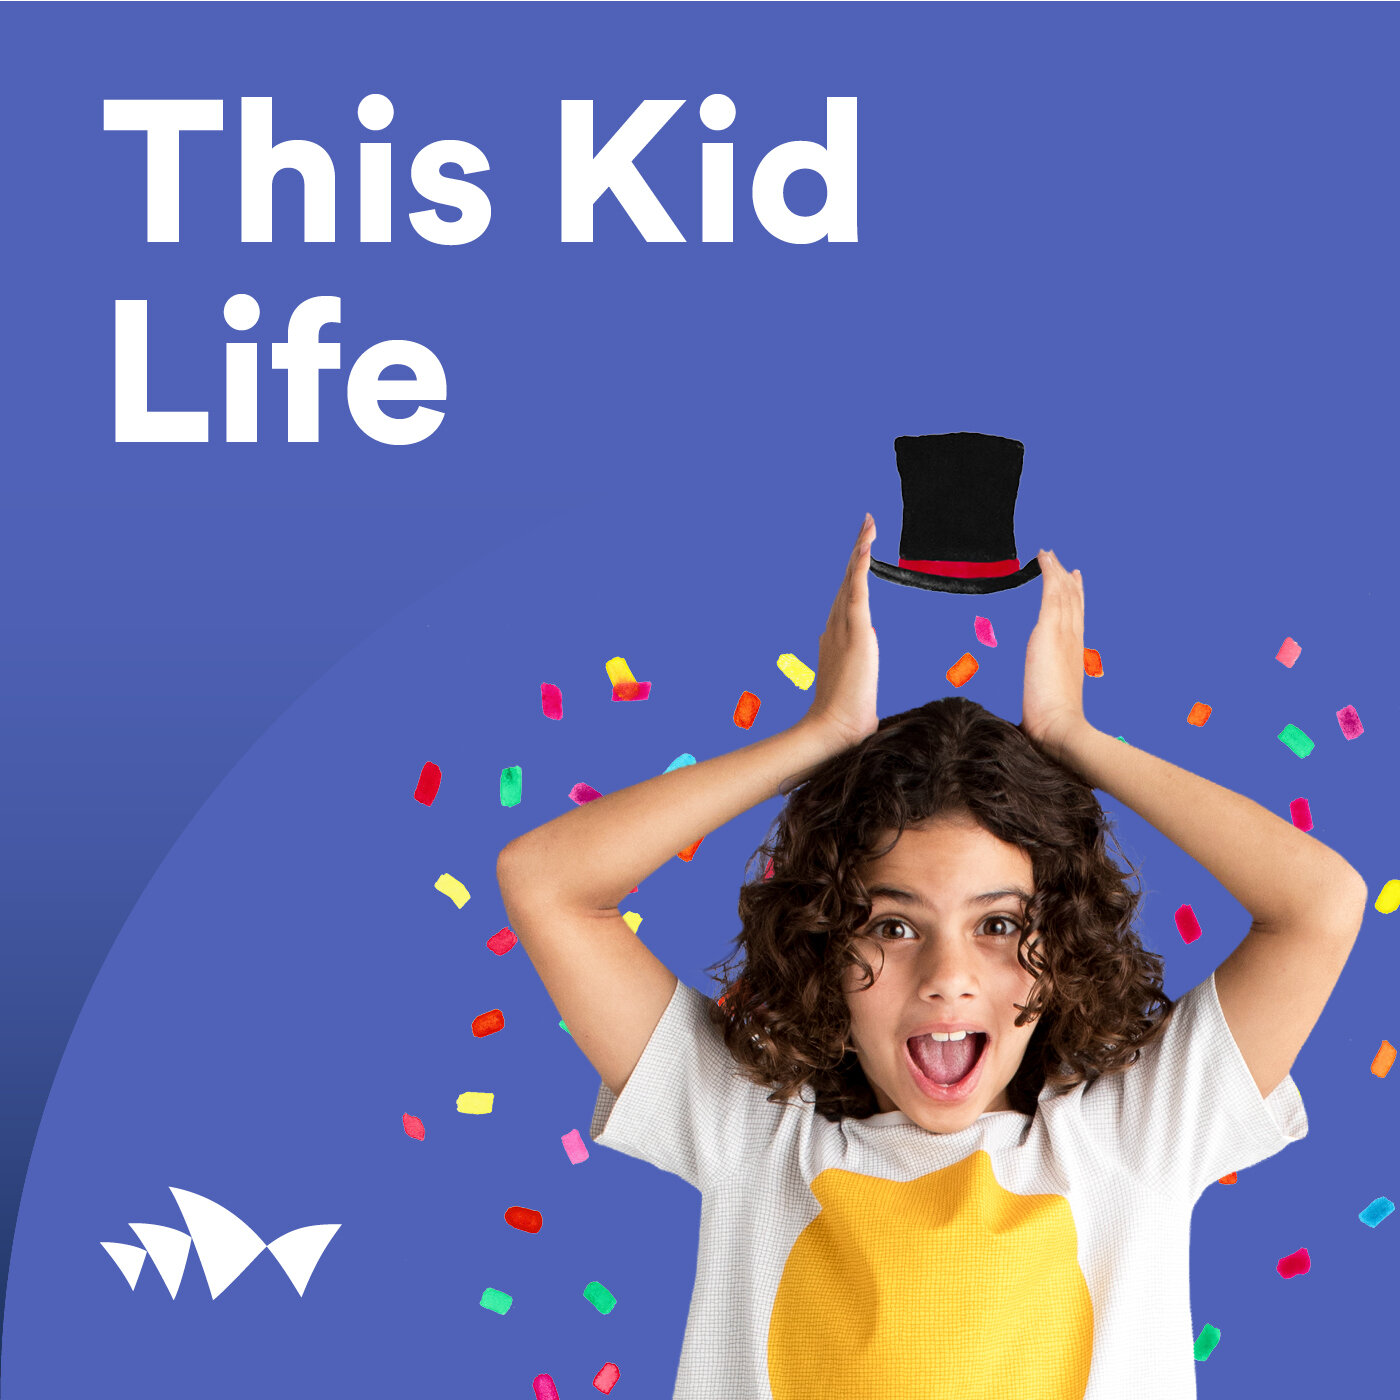 New live child. Life Kids. Life for Kids. This Kid исполнитель. M&D Life for Kids.